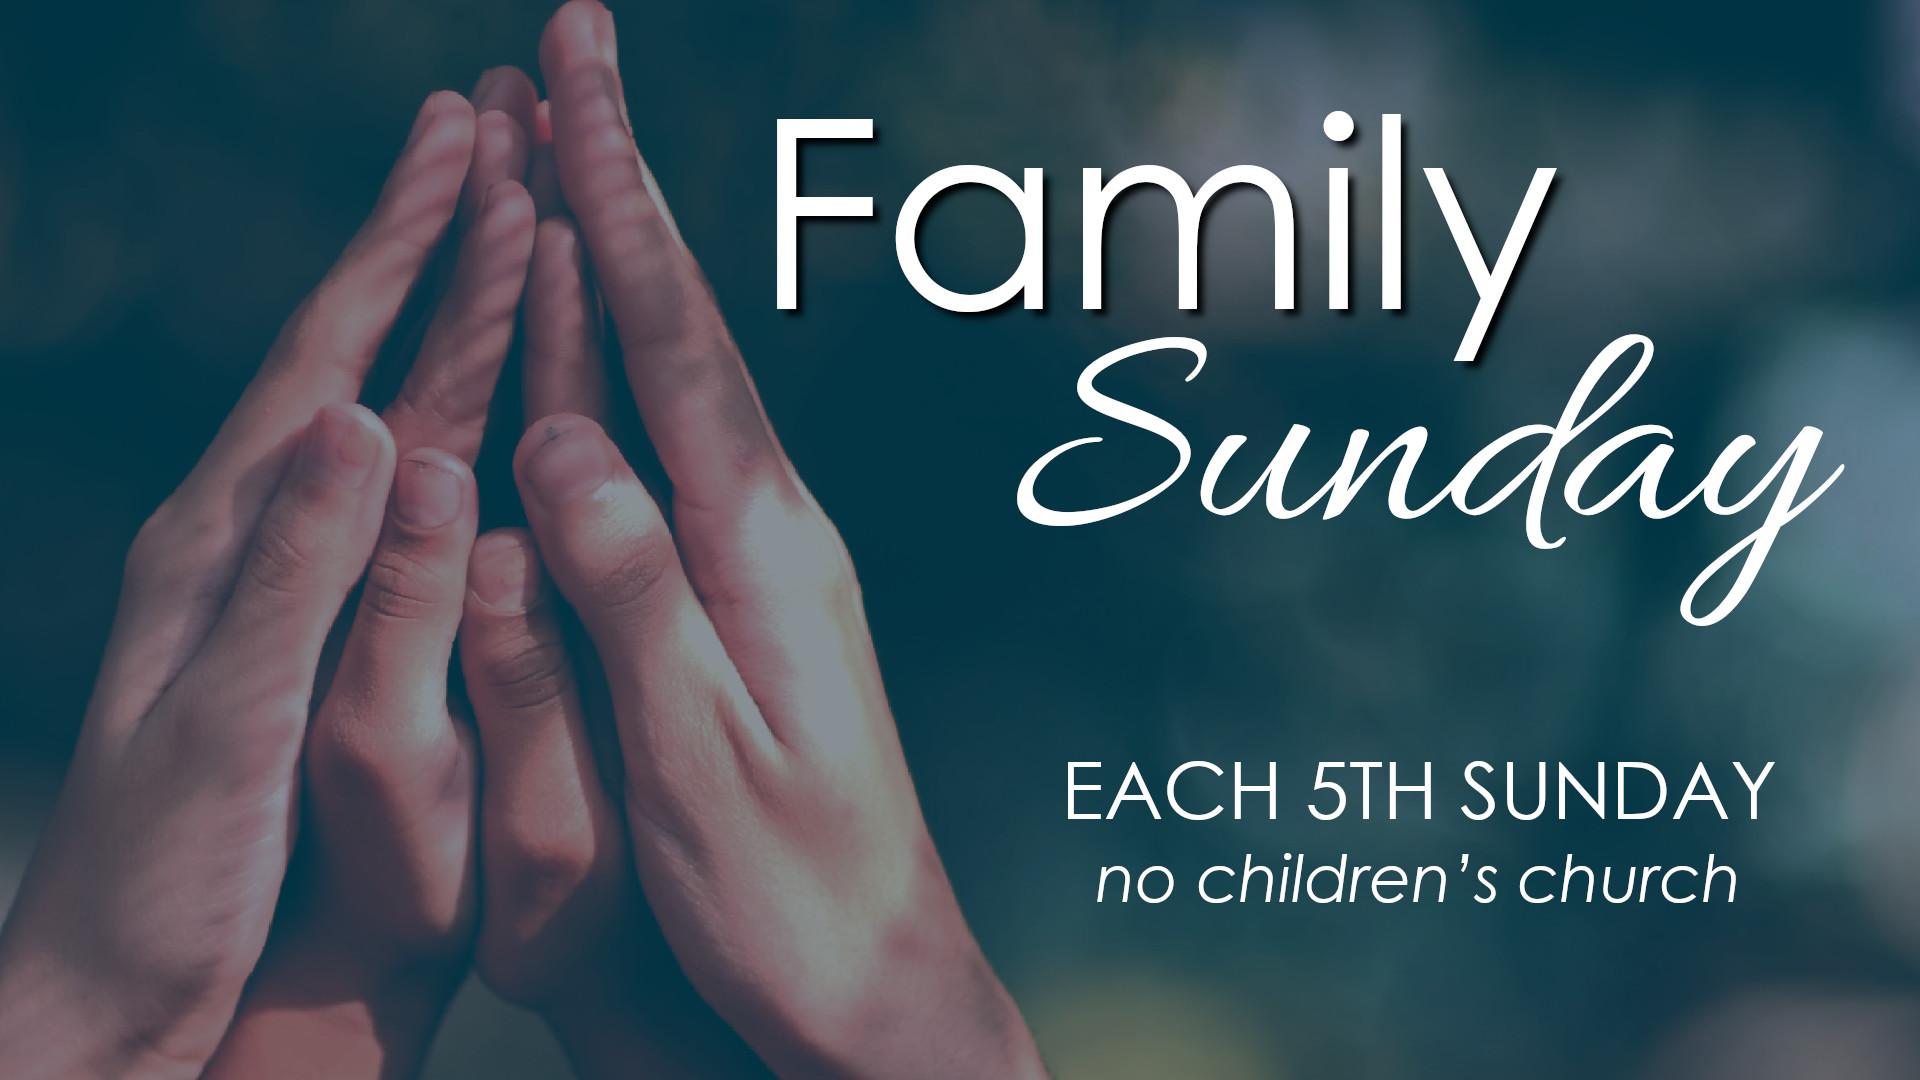 Family Sunday each fifth Sunday - no children's church